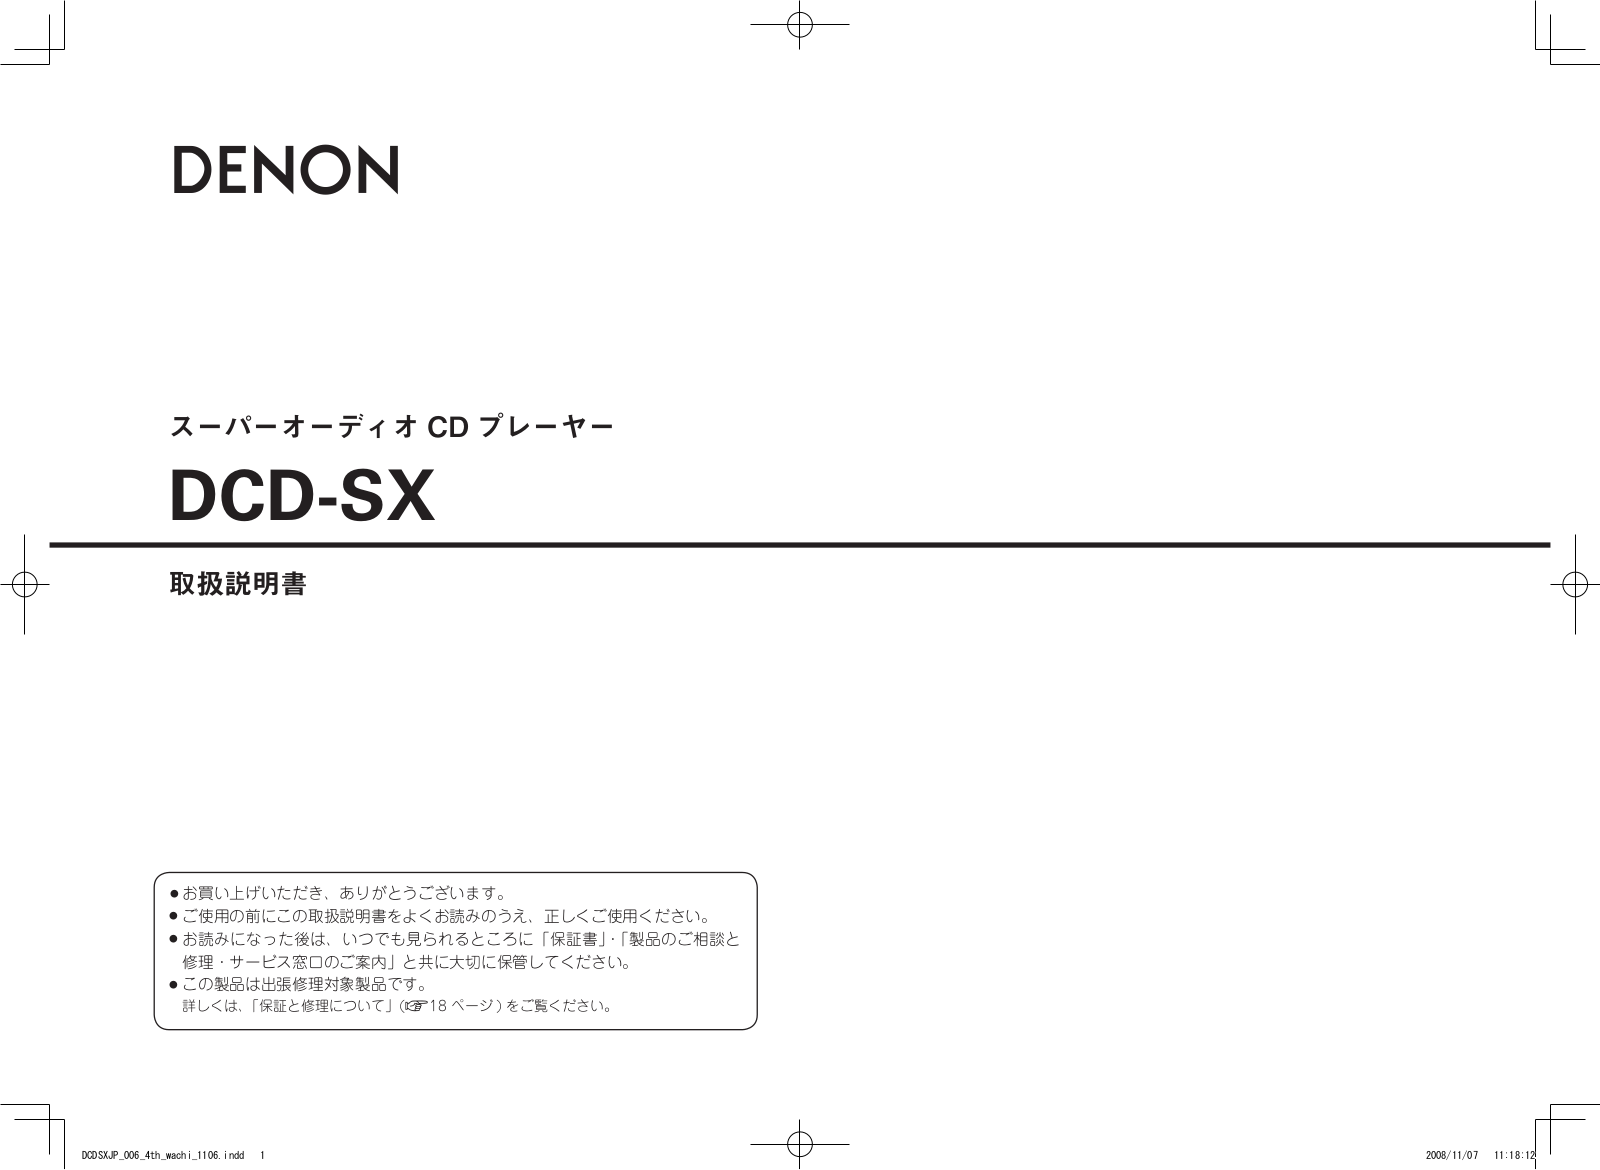 Denon DCD-SX Owner's Manual